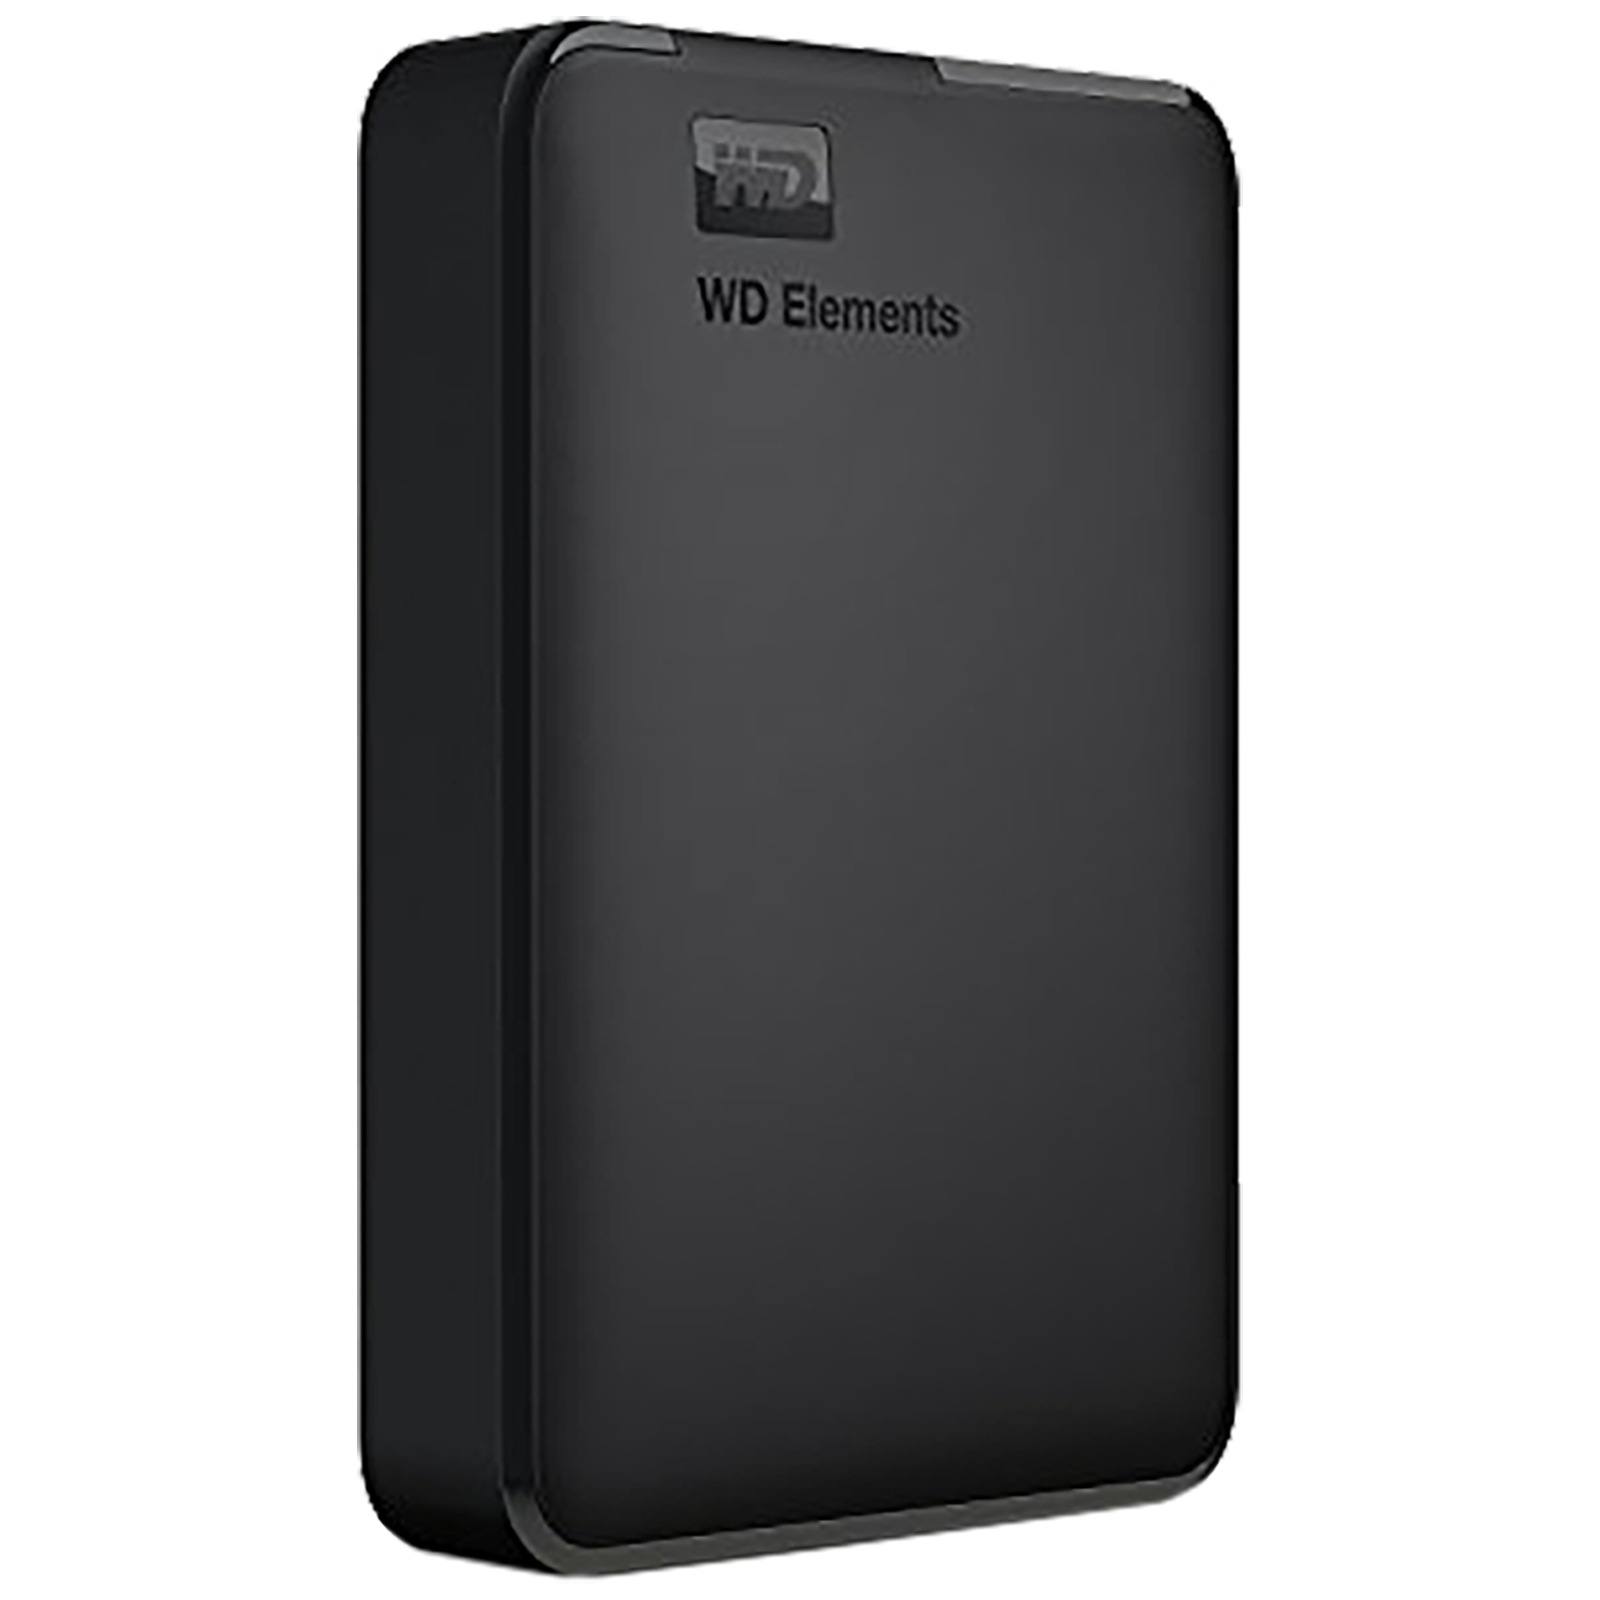 Western Digital Elements 5 TB USB 3.0 Hard Disk Drive (Fast Transfer Rates, WDBHDW0050BBK-EESN, Black)